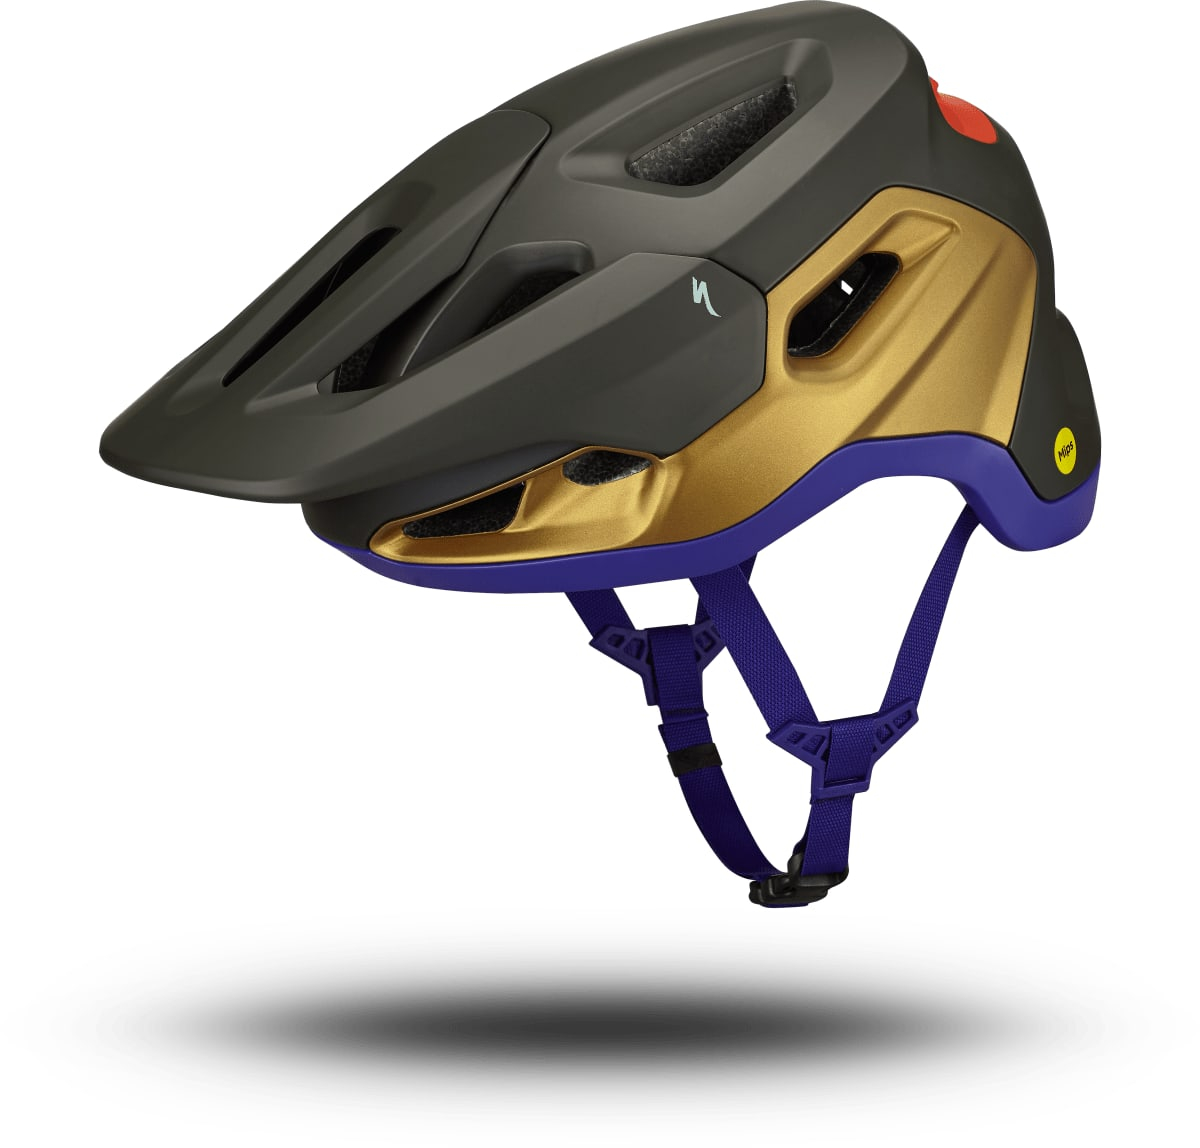 Cycles UK Specialized  Tactic 4 Mountain Bike Helmet M Dark Moss Wild